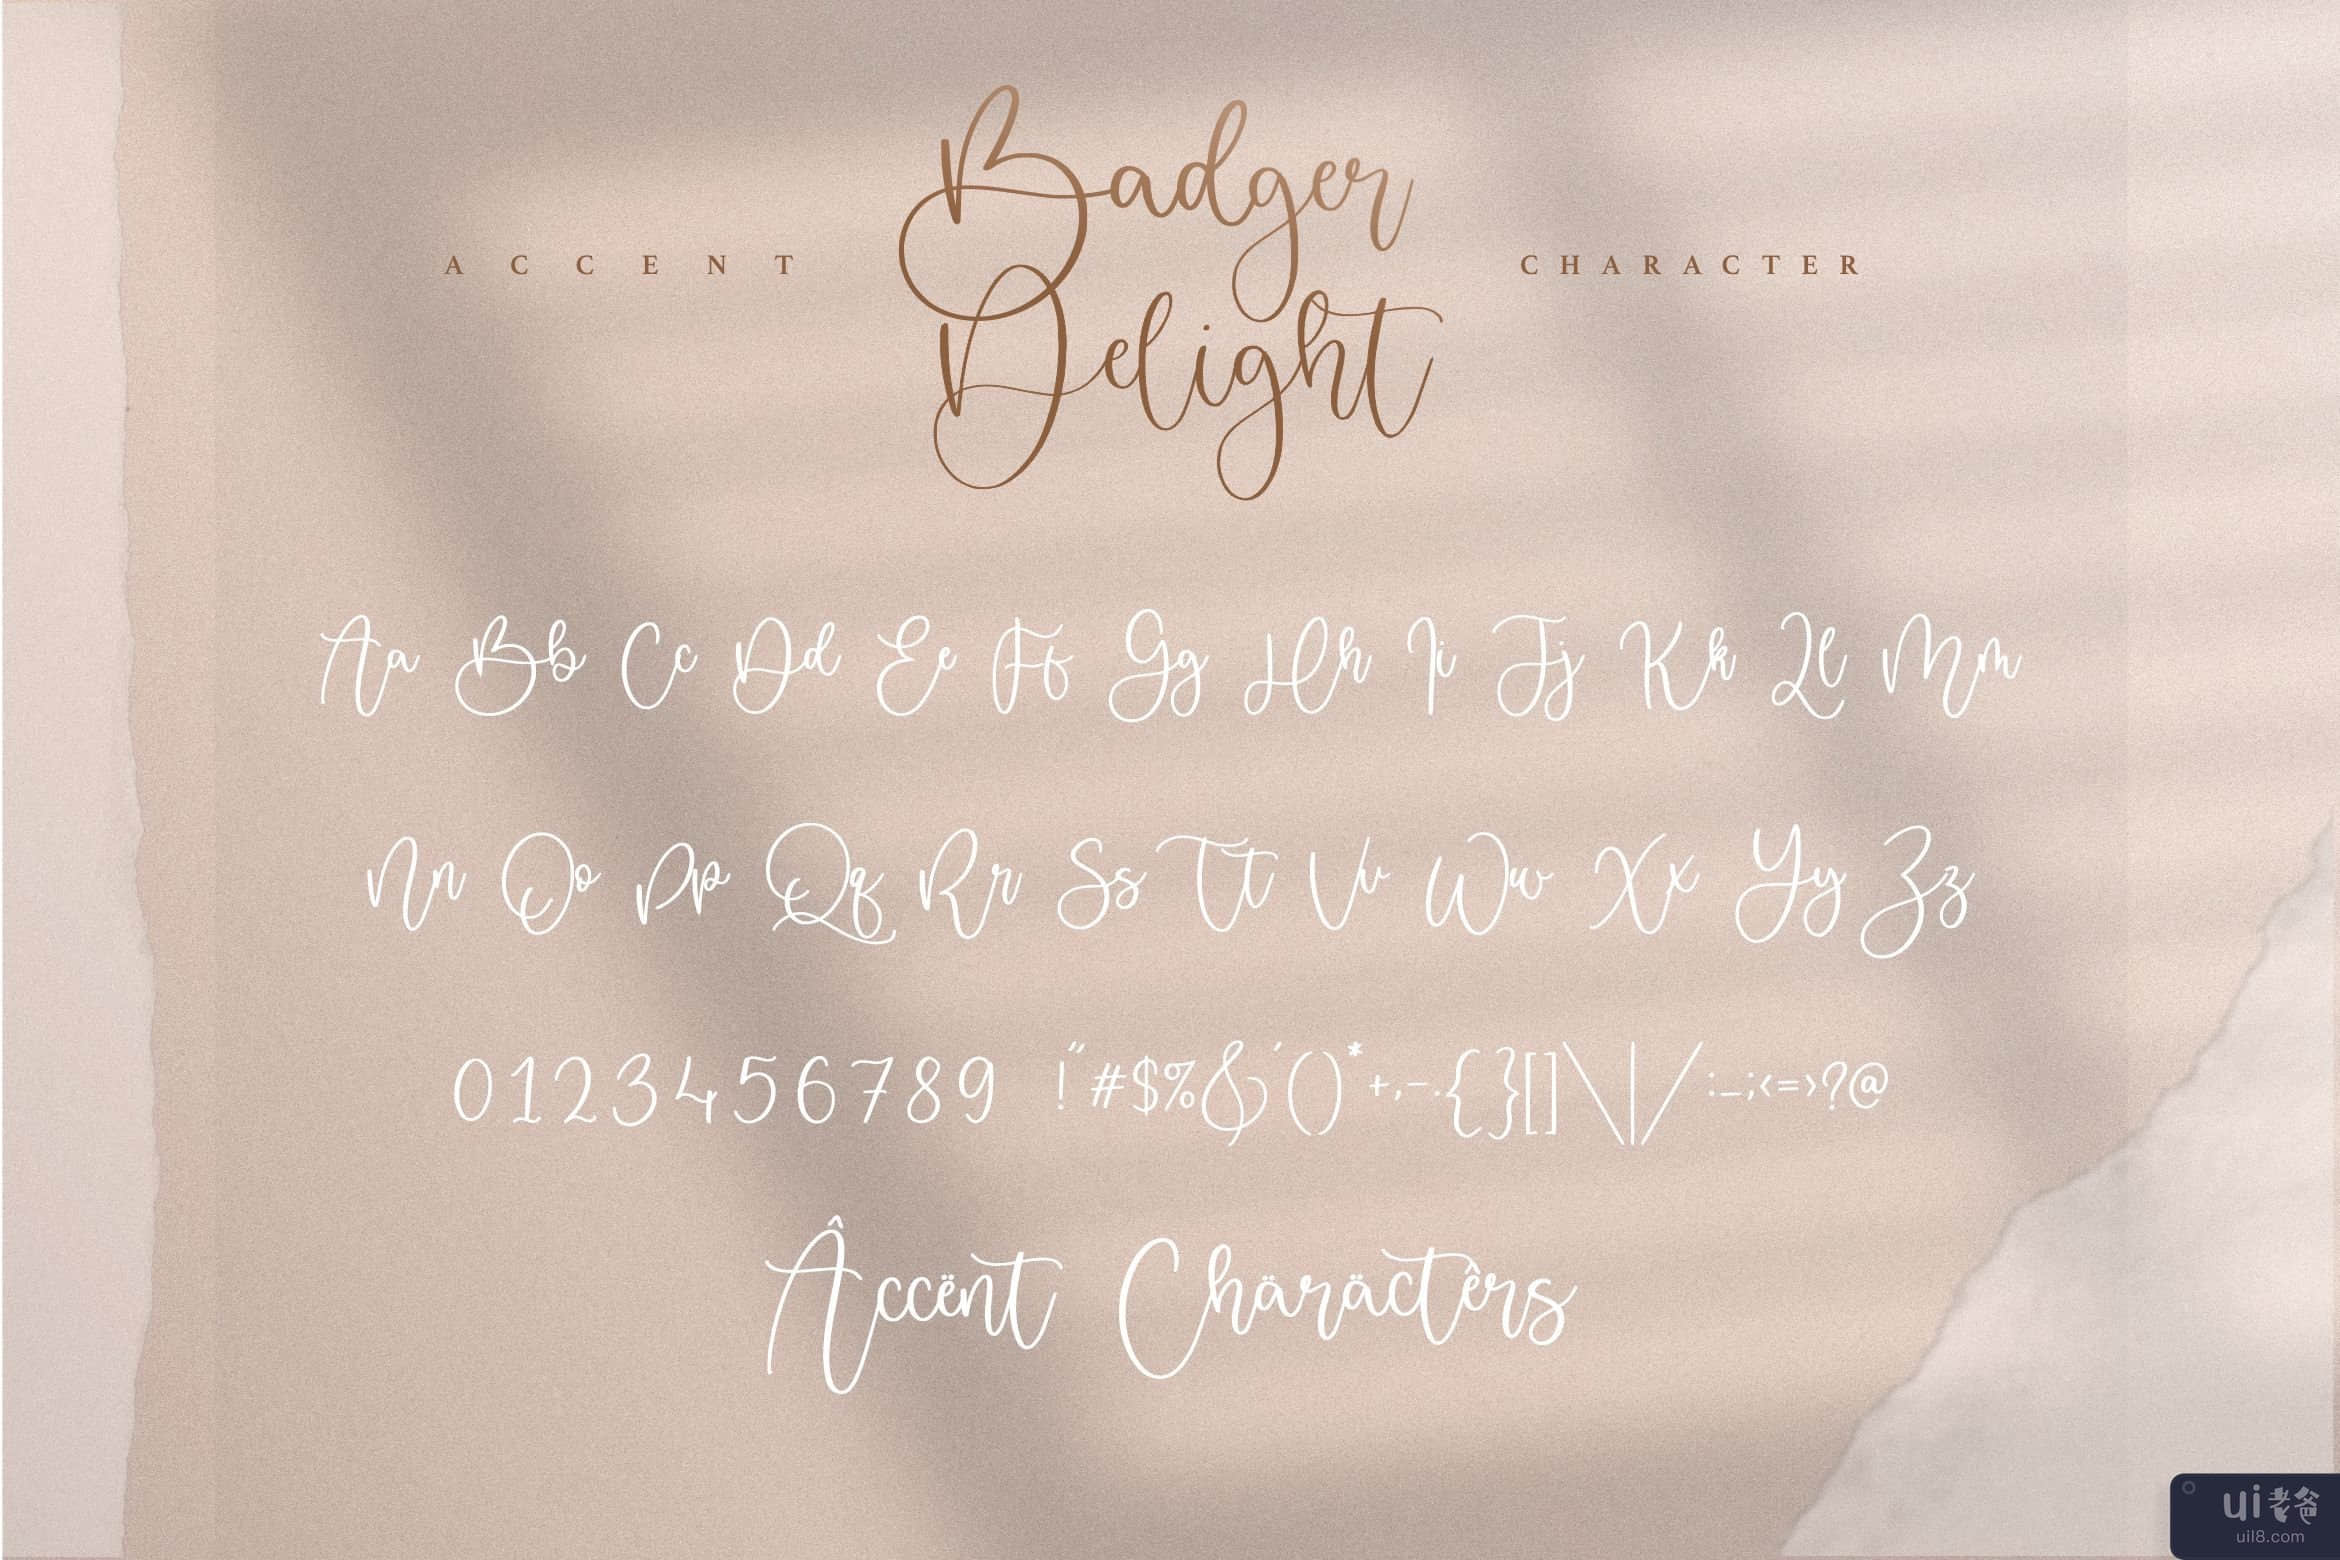 Badger Delight 是一种现代单行脚本字体(Badger Delight is a Modern Monoline Script Font)插图4